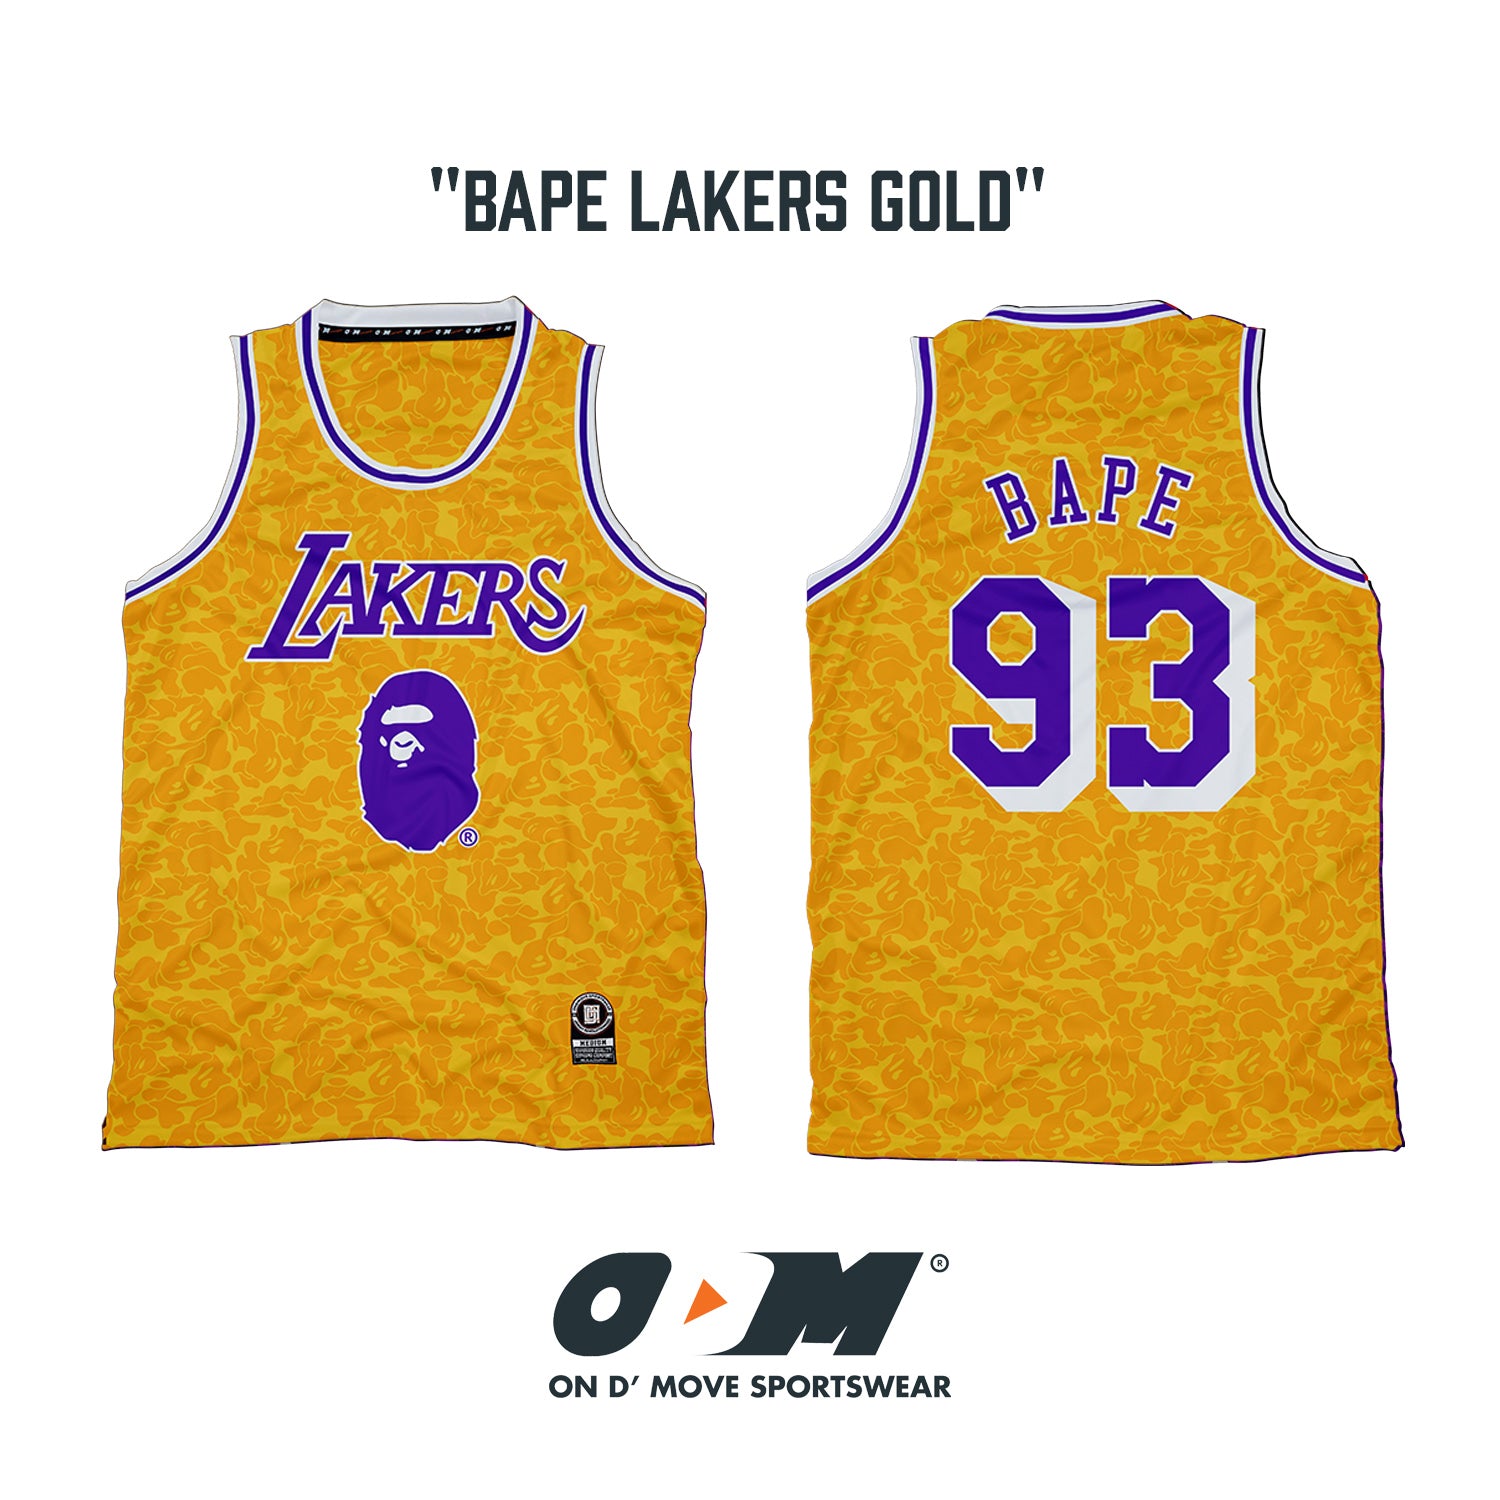 BAPE Lakers Gold Jersey